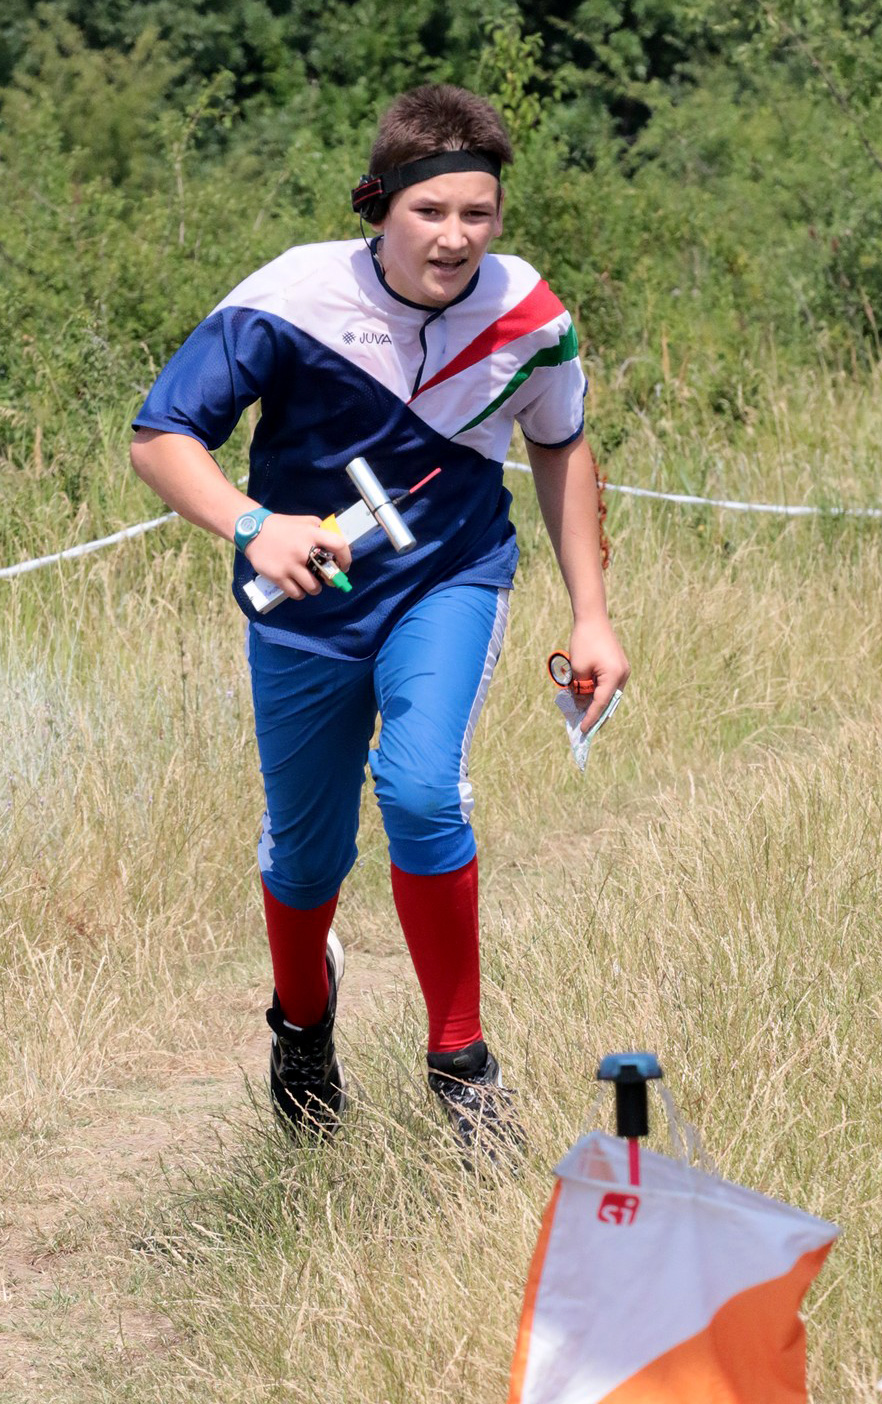 Csongor Venczel (HA0FOX) is running at the World Amateur Radio Direction Finding Youth Championship in Târgu Jiu (Zsilvásárhely)